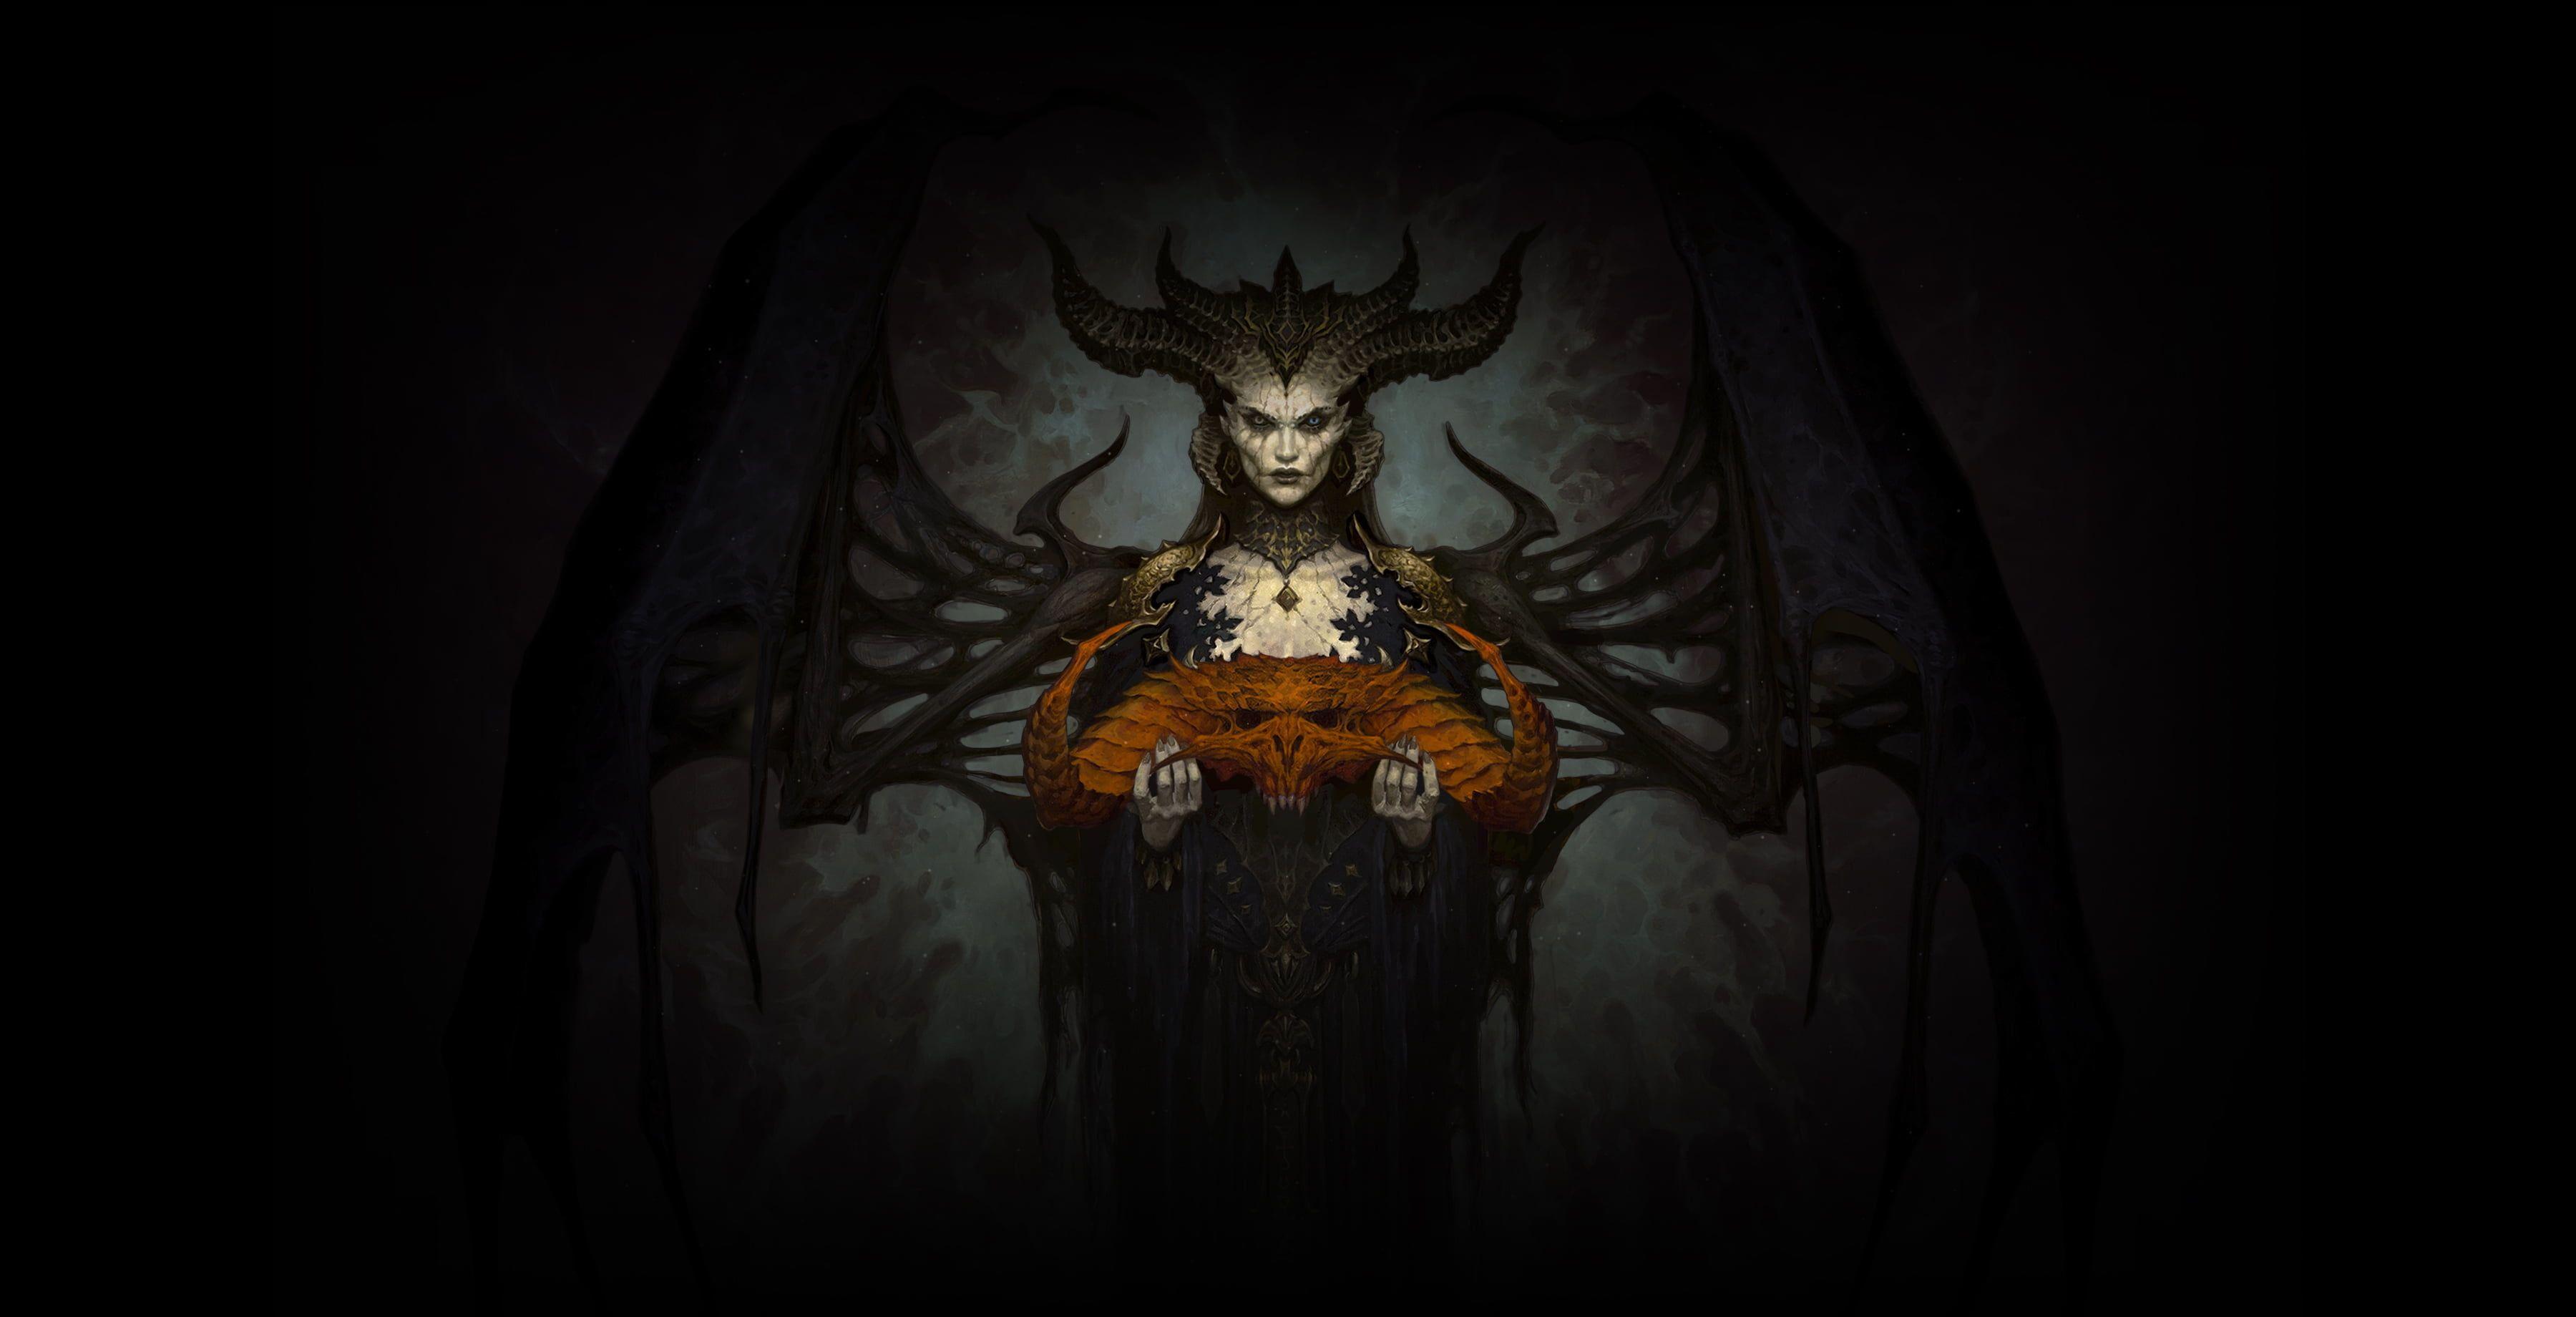 Diablo 4 Wallpapers Top Free Diablo 4 Backgrounds Wallpaperaccess